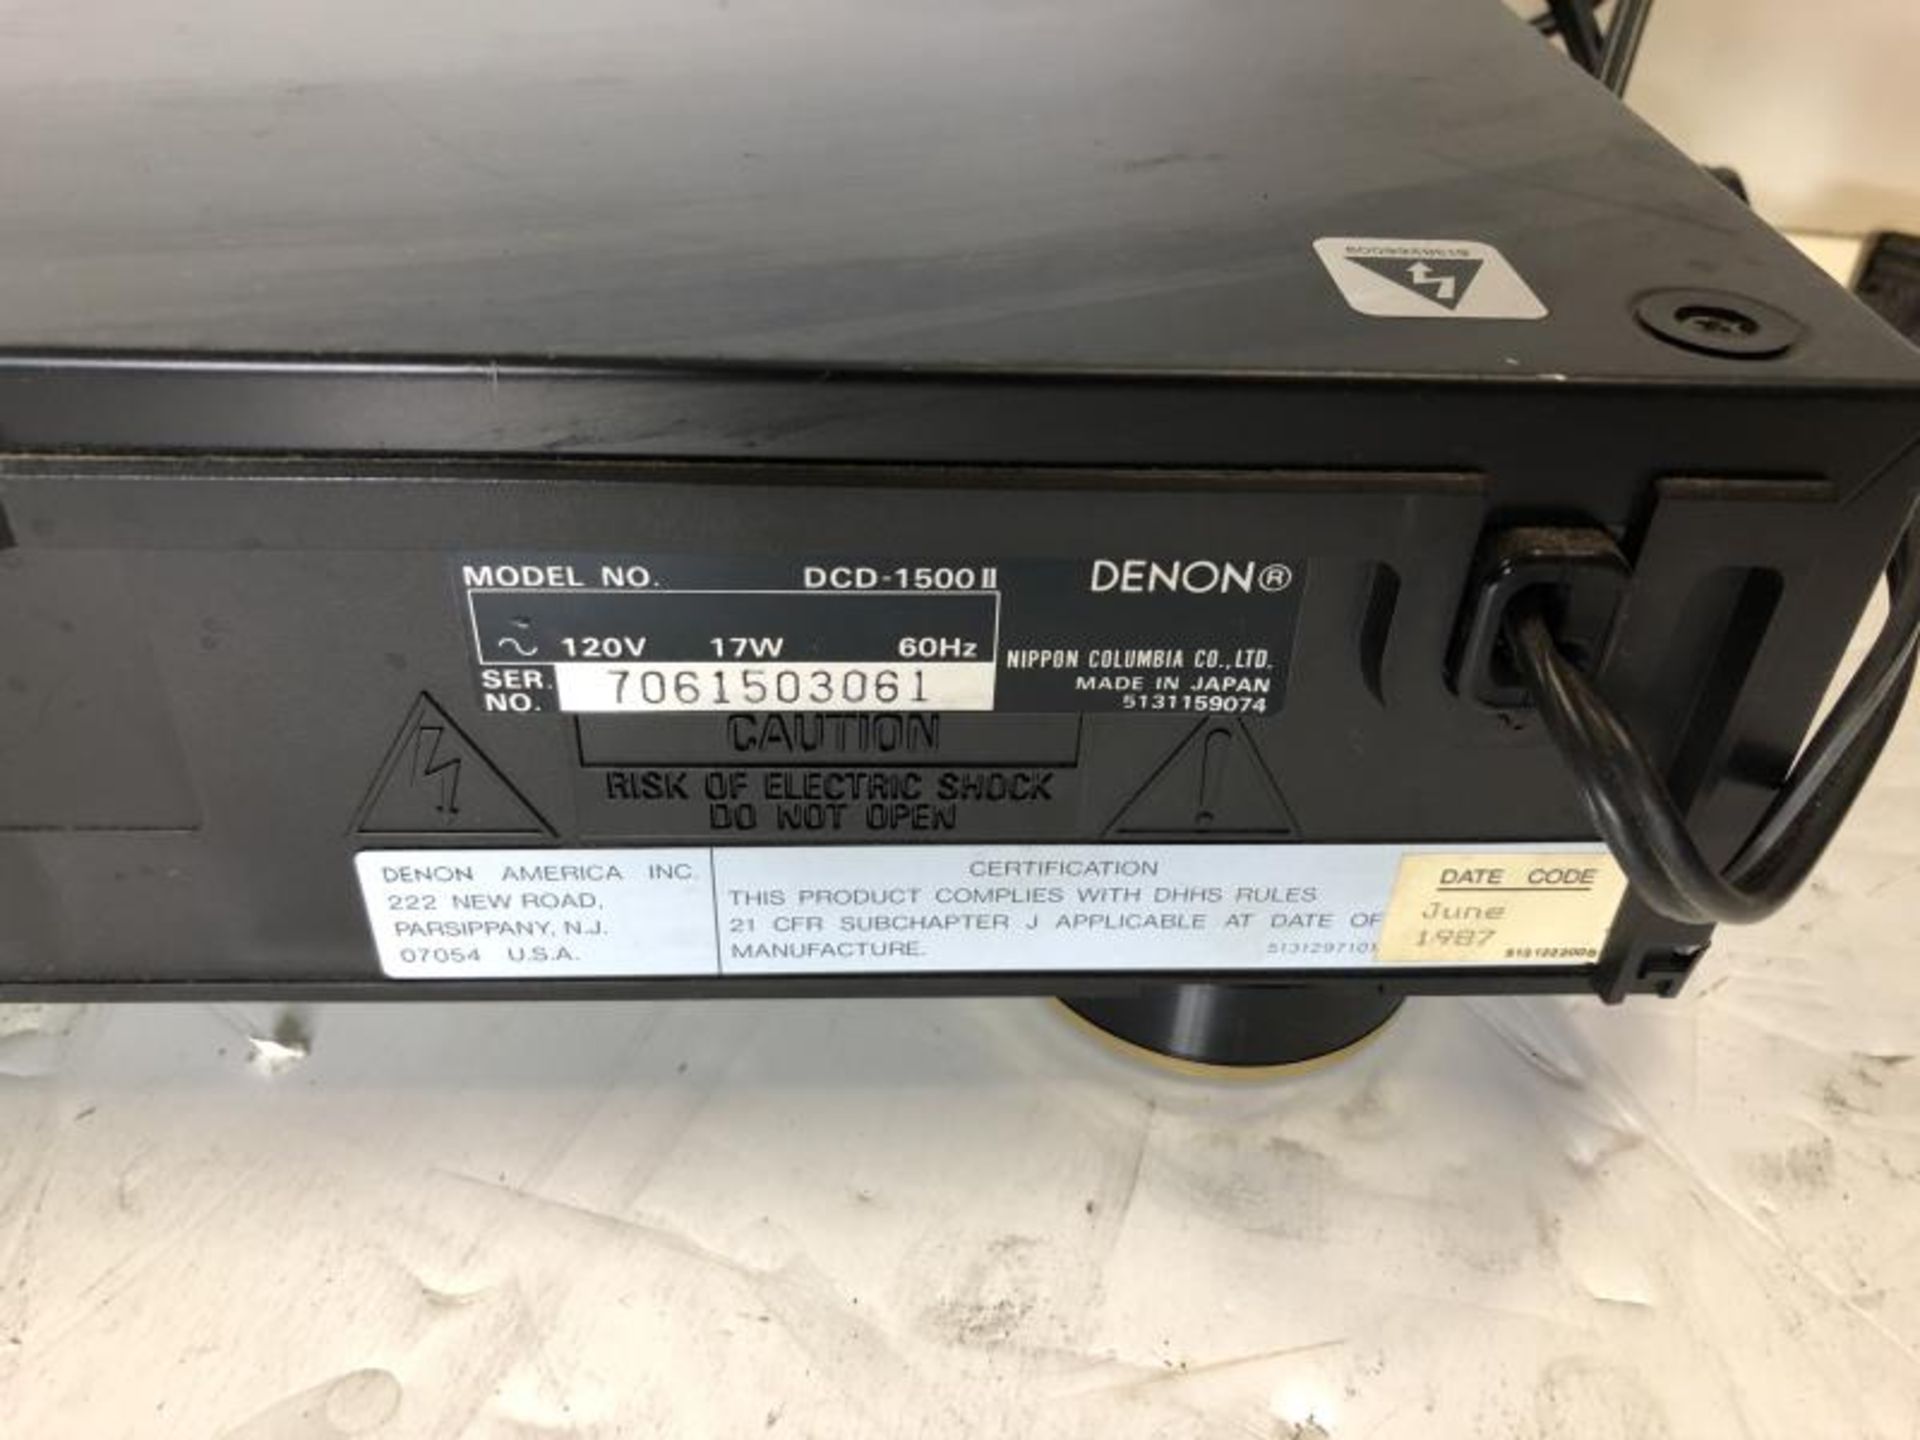 Denon model DCD 1500 II CD player - Image 3 of 3